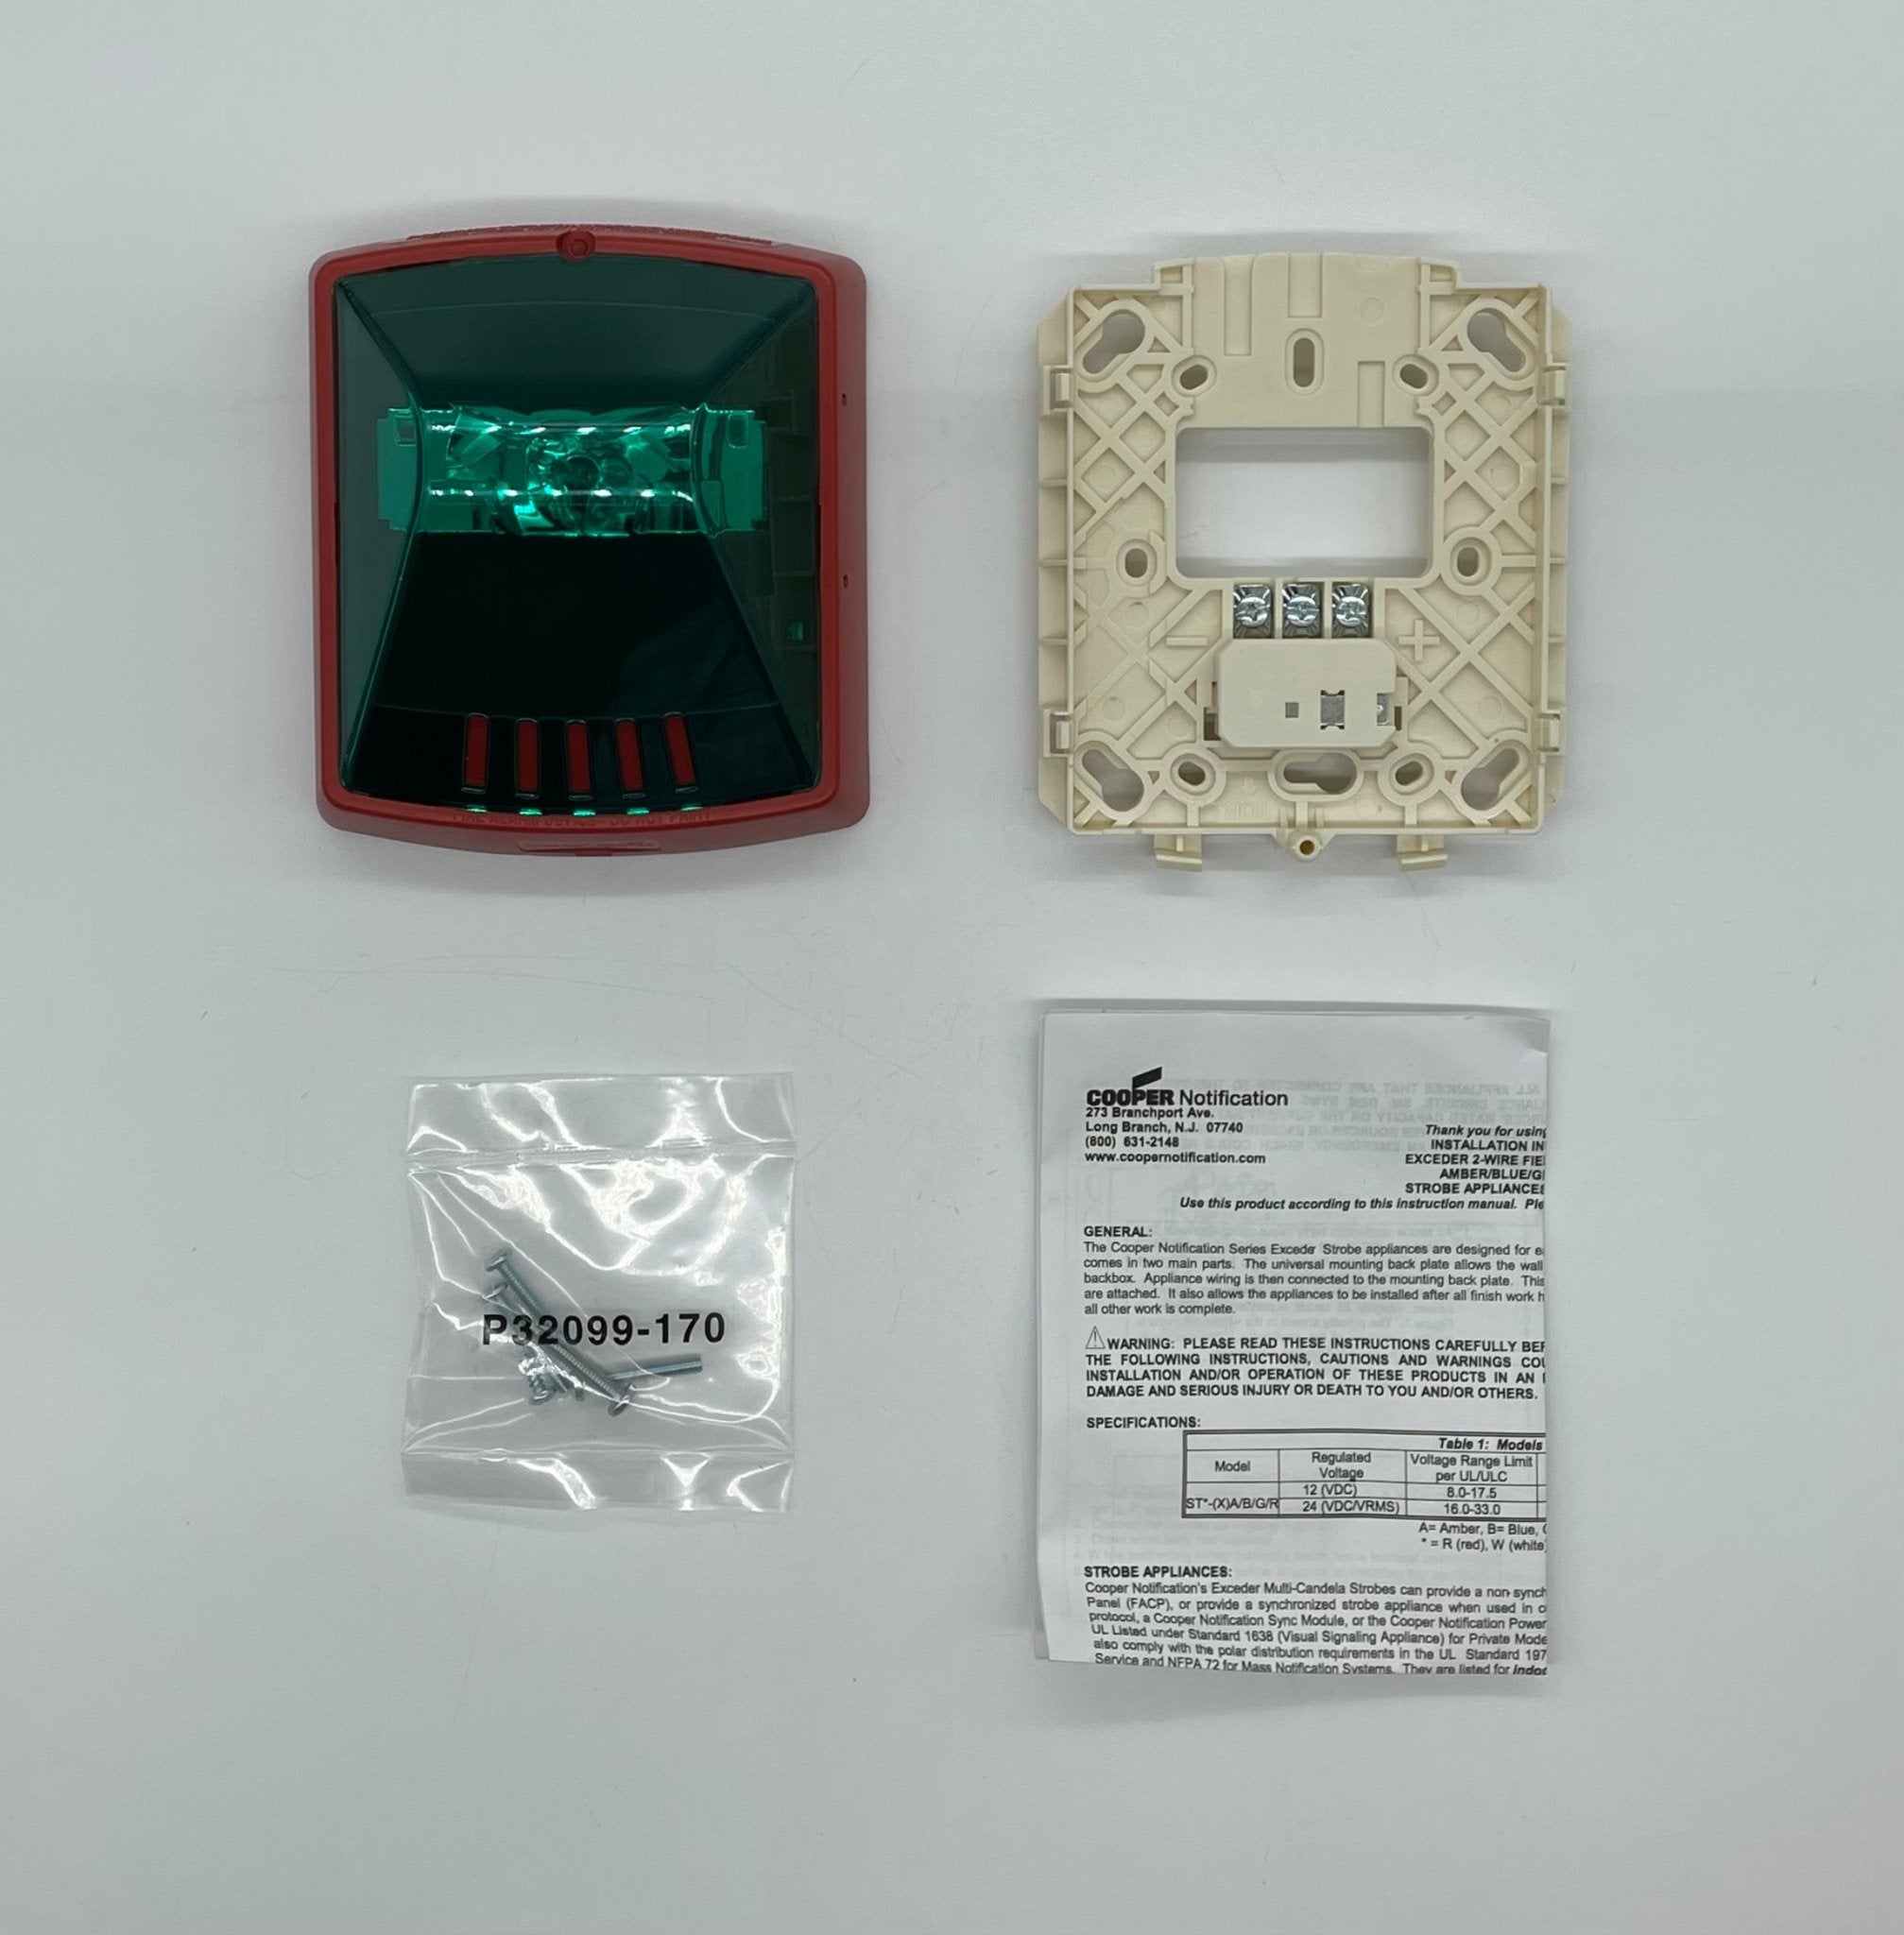 Wheelock STR-NG - The Fire Alarm Supplier